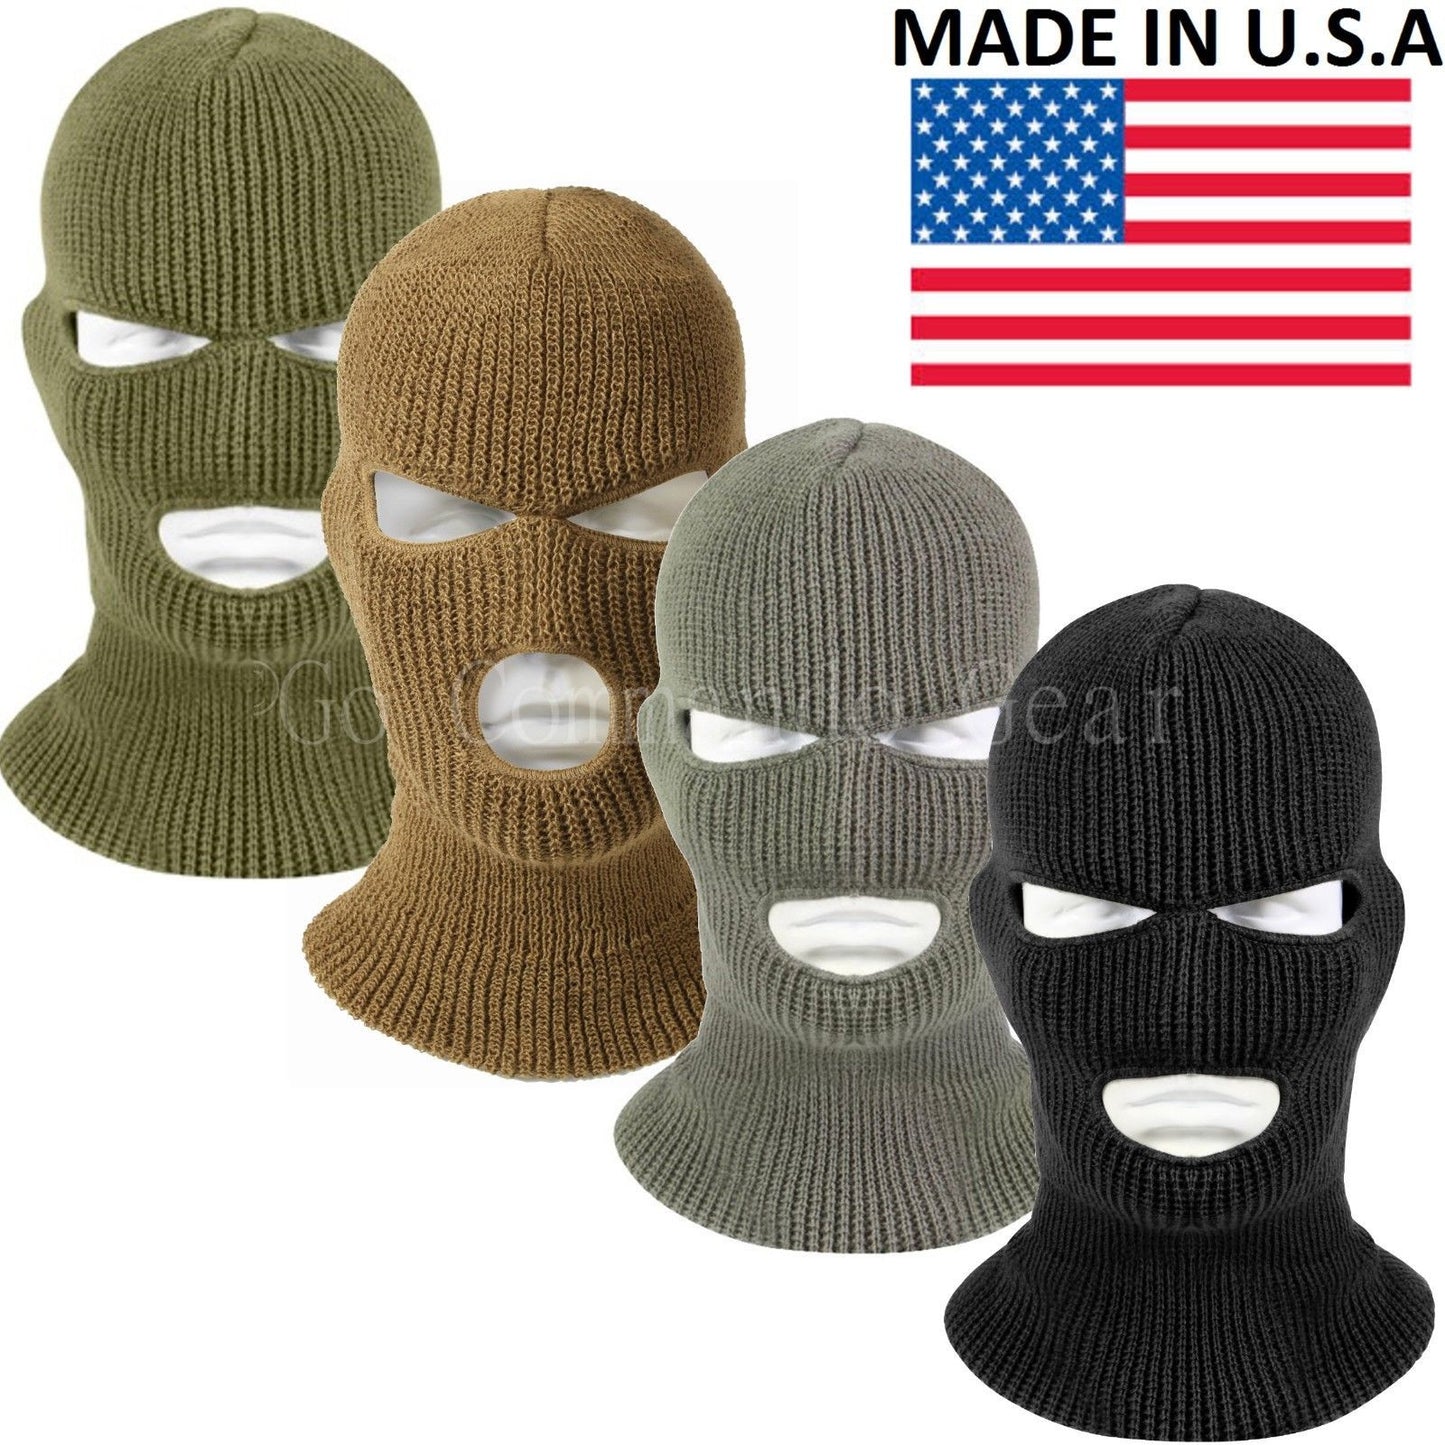 3 Hole Face Mask Ski Mask Winter Cap Balaclava Hood Army Tactical Mask USA MADE